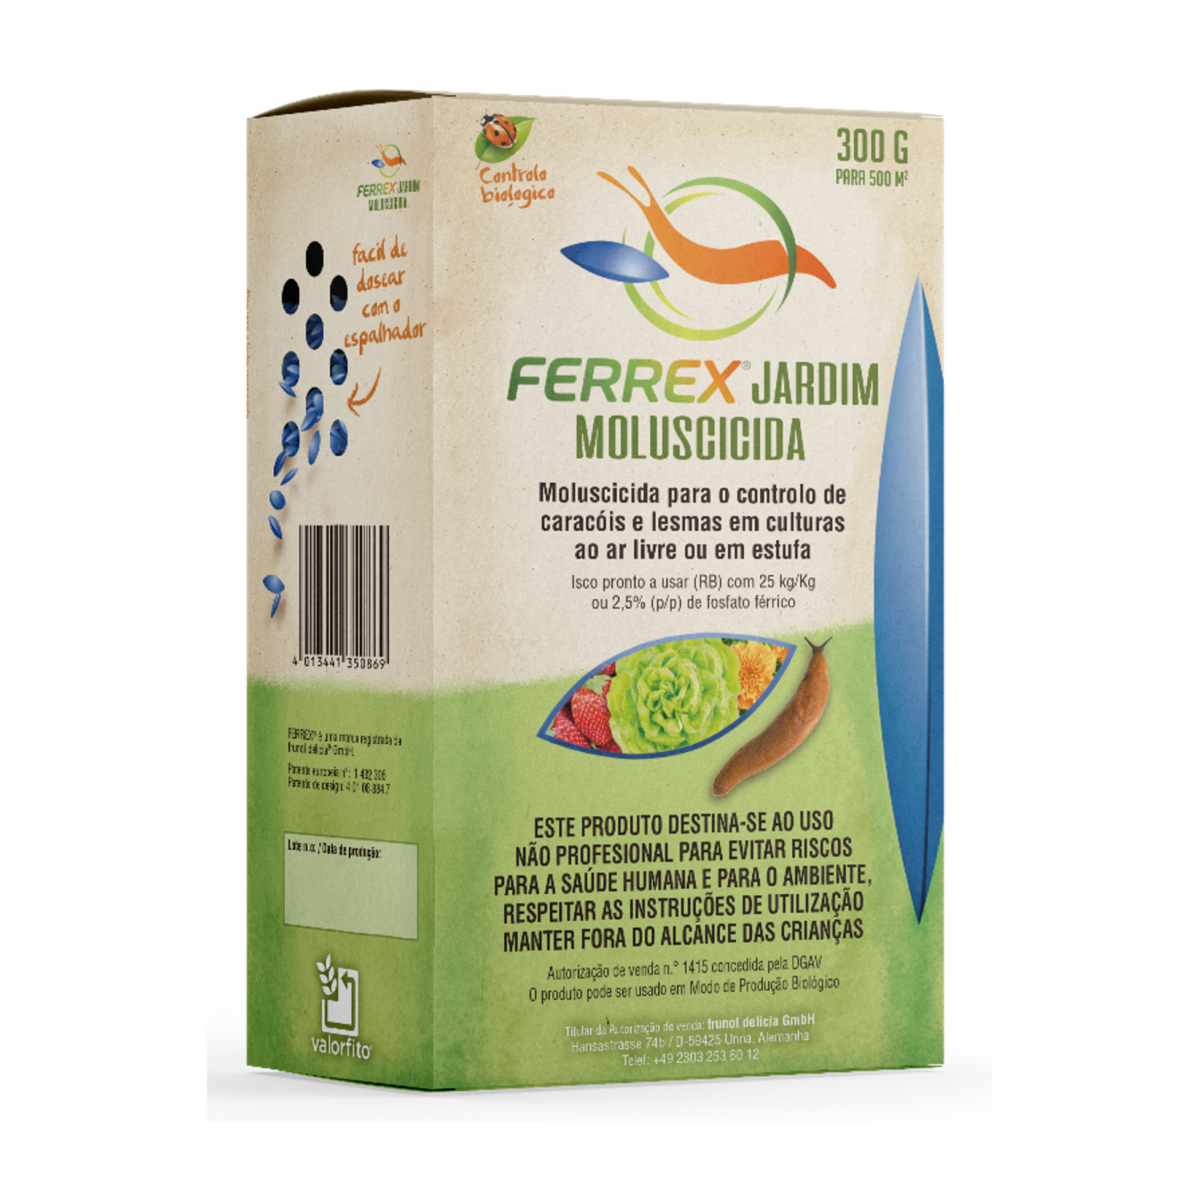 Ferrex jardim moluscicida - Jovagro (Embalagem 300g)